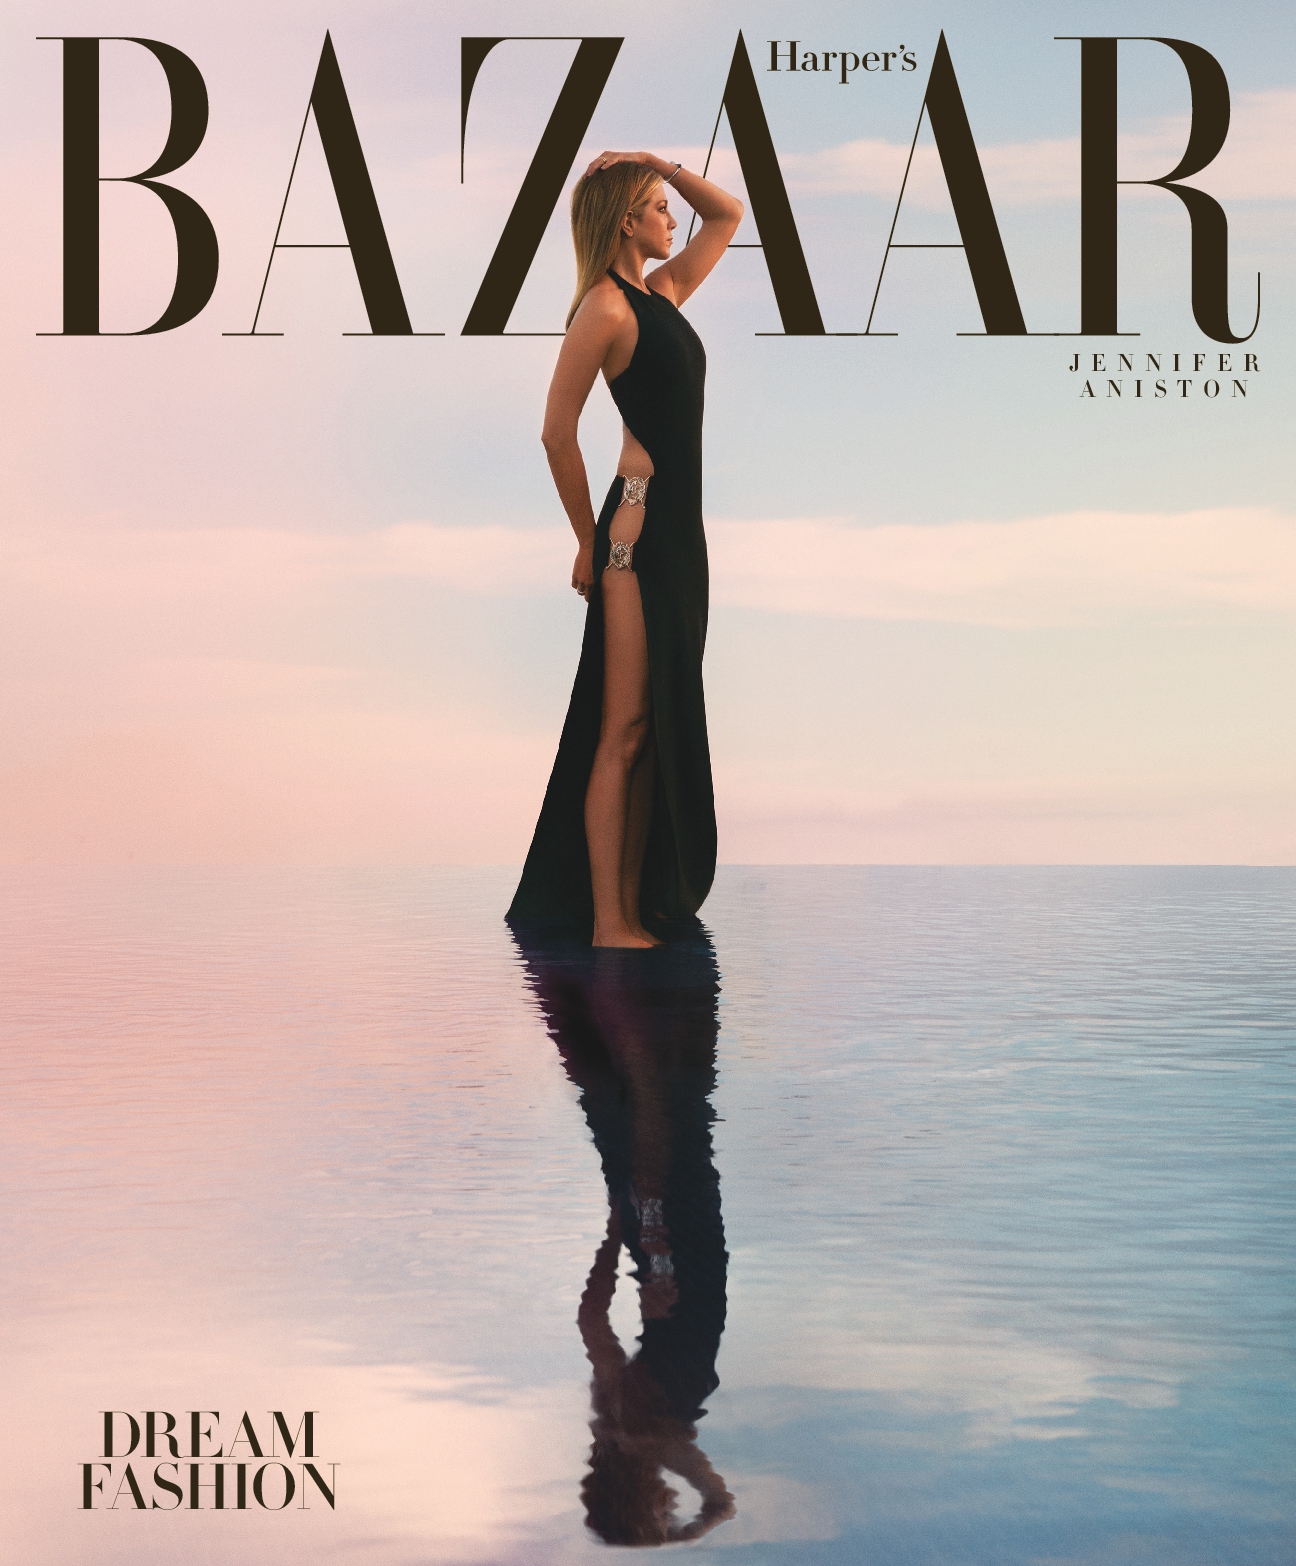 Harper's Bazaar - "Jennifer Aniston," April